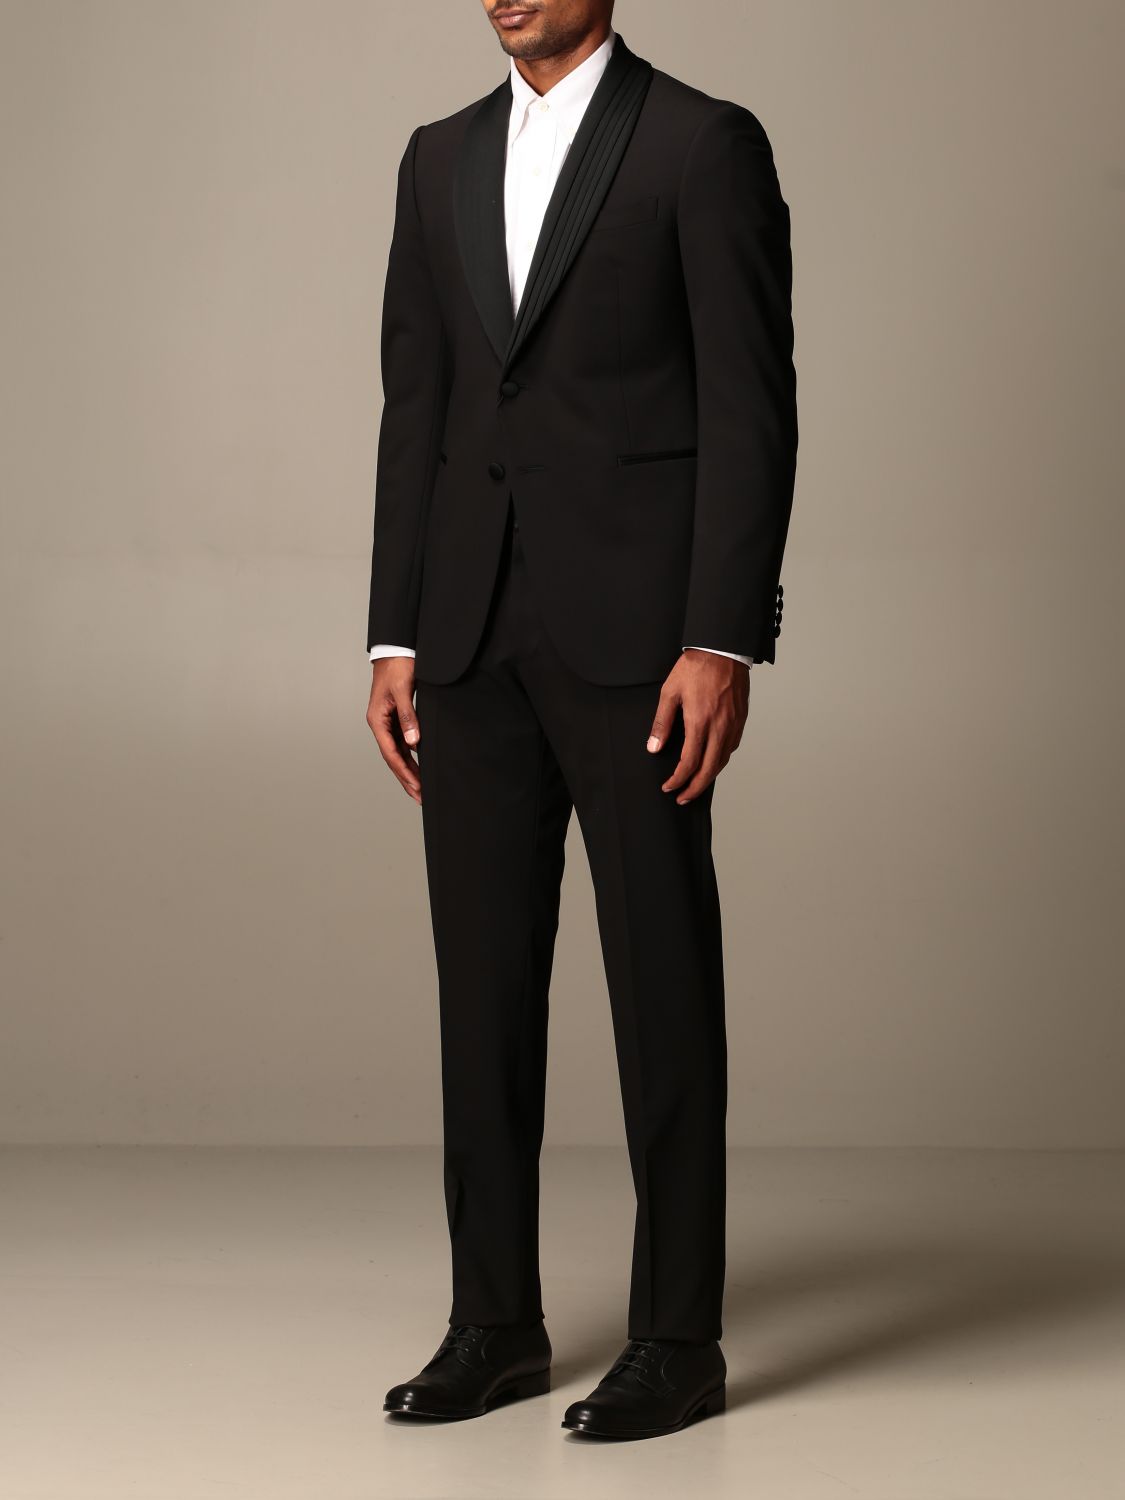 Emporio Armani Outlet: tuxedo suit drop 7 - Black | Suit Emporio Armani ...